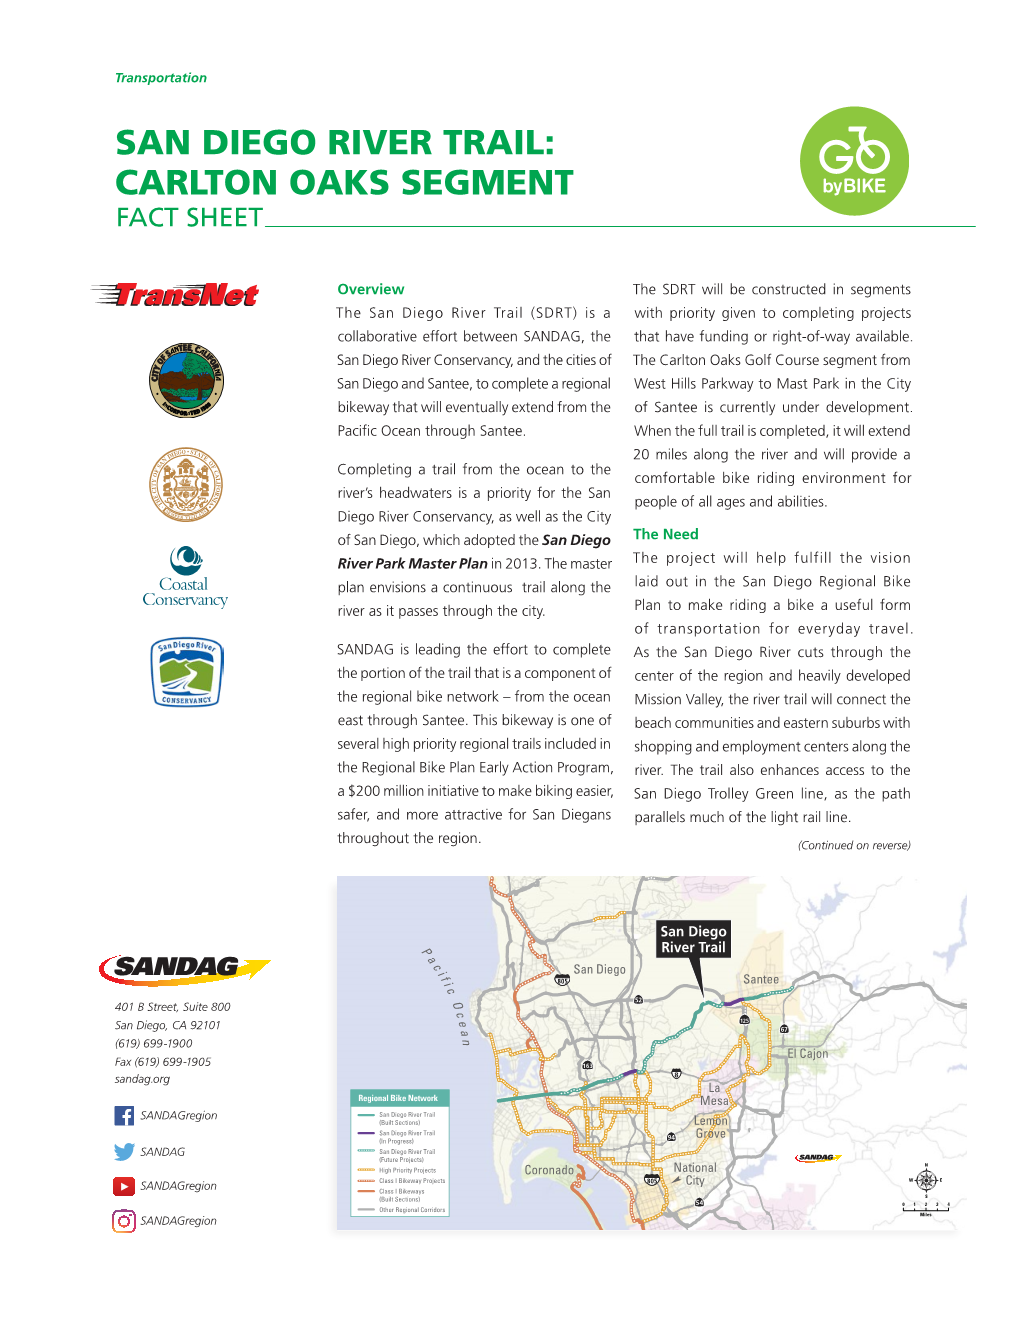 San Diego River Trail: Carlton Oaks Segment Fact Sheet